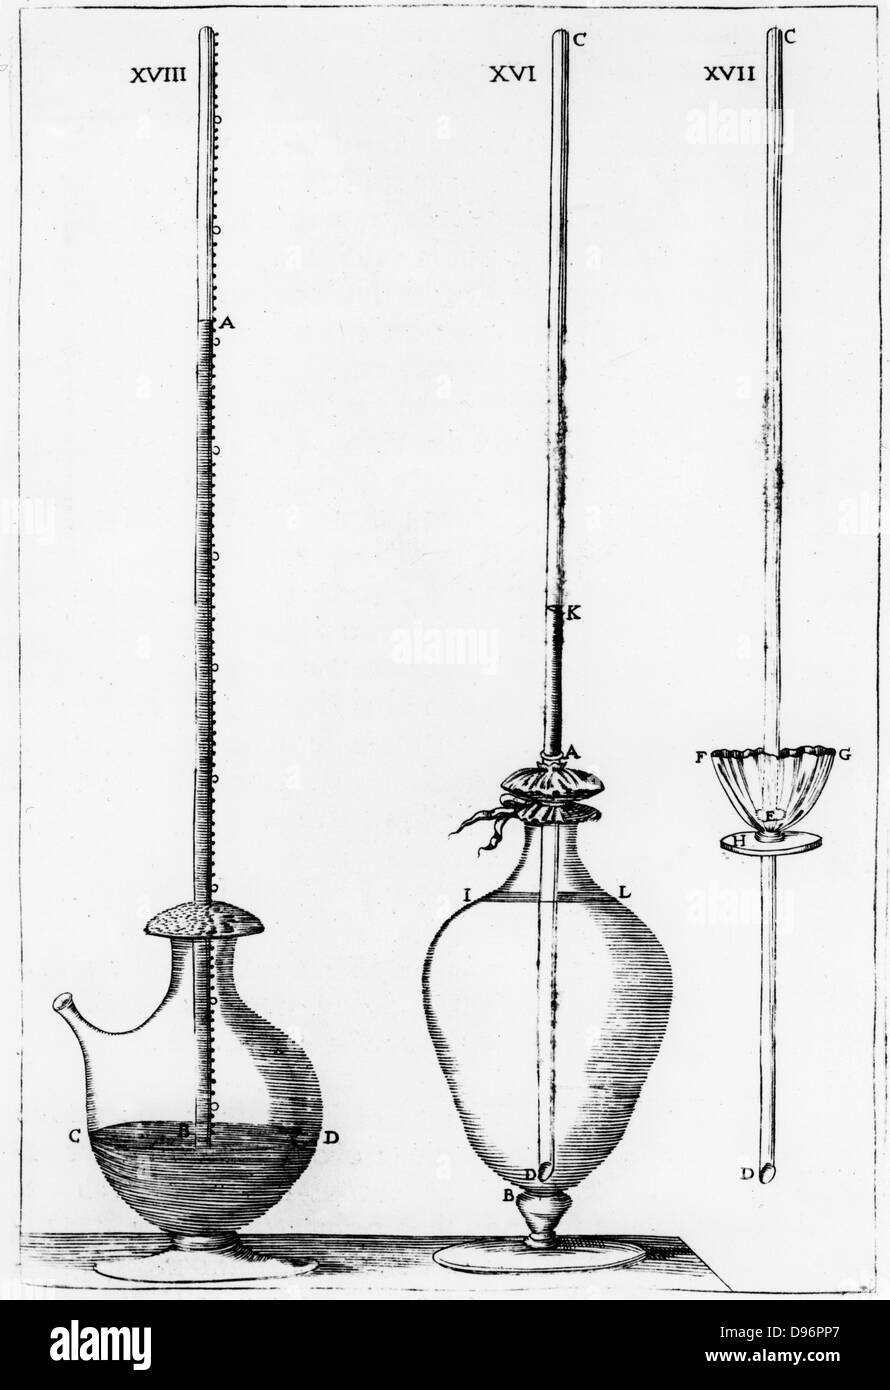 Experimentelle Barometer von der Accademia dell Cimento verwendet. Abb. XVIII ist ein Quecksilber Barometer. Von aggi De naturali esperienze fatte nell', Academia del Cimento', 2. (Florenz, 1691). Gravur. Stockfoto